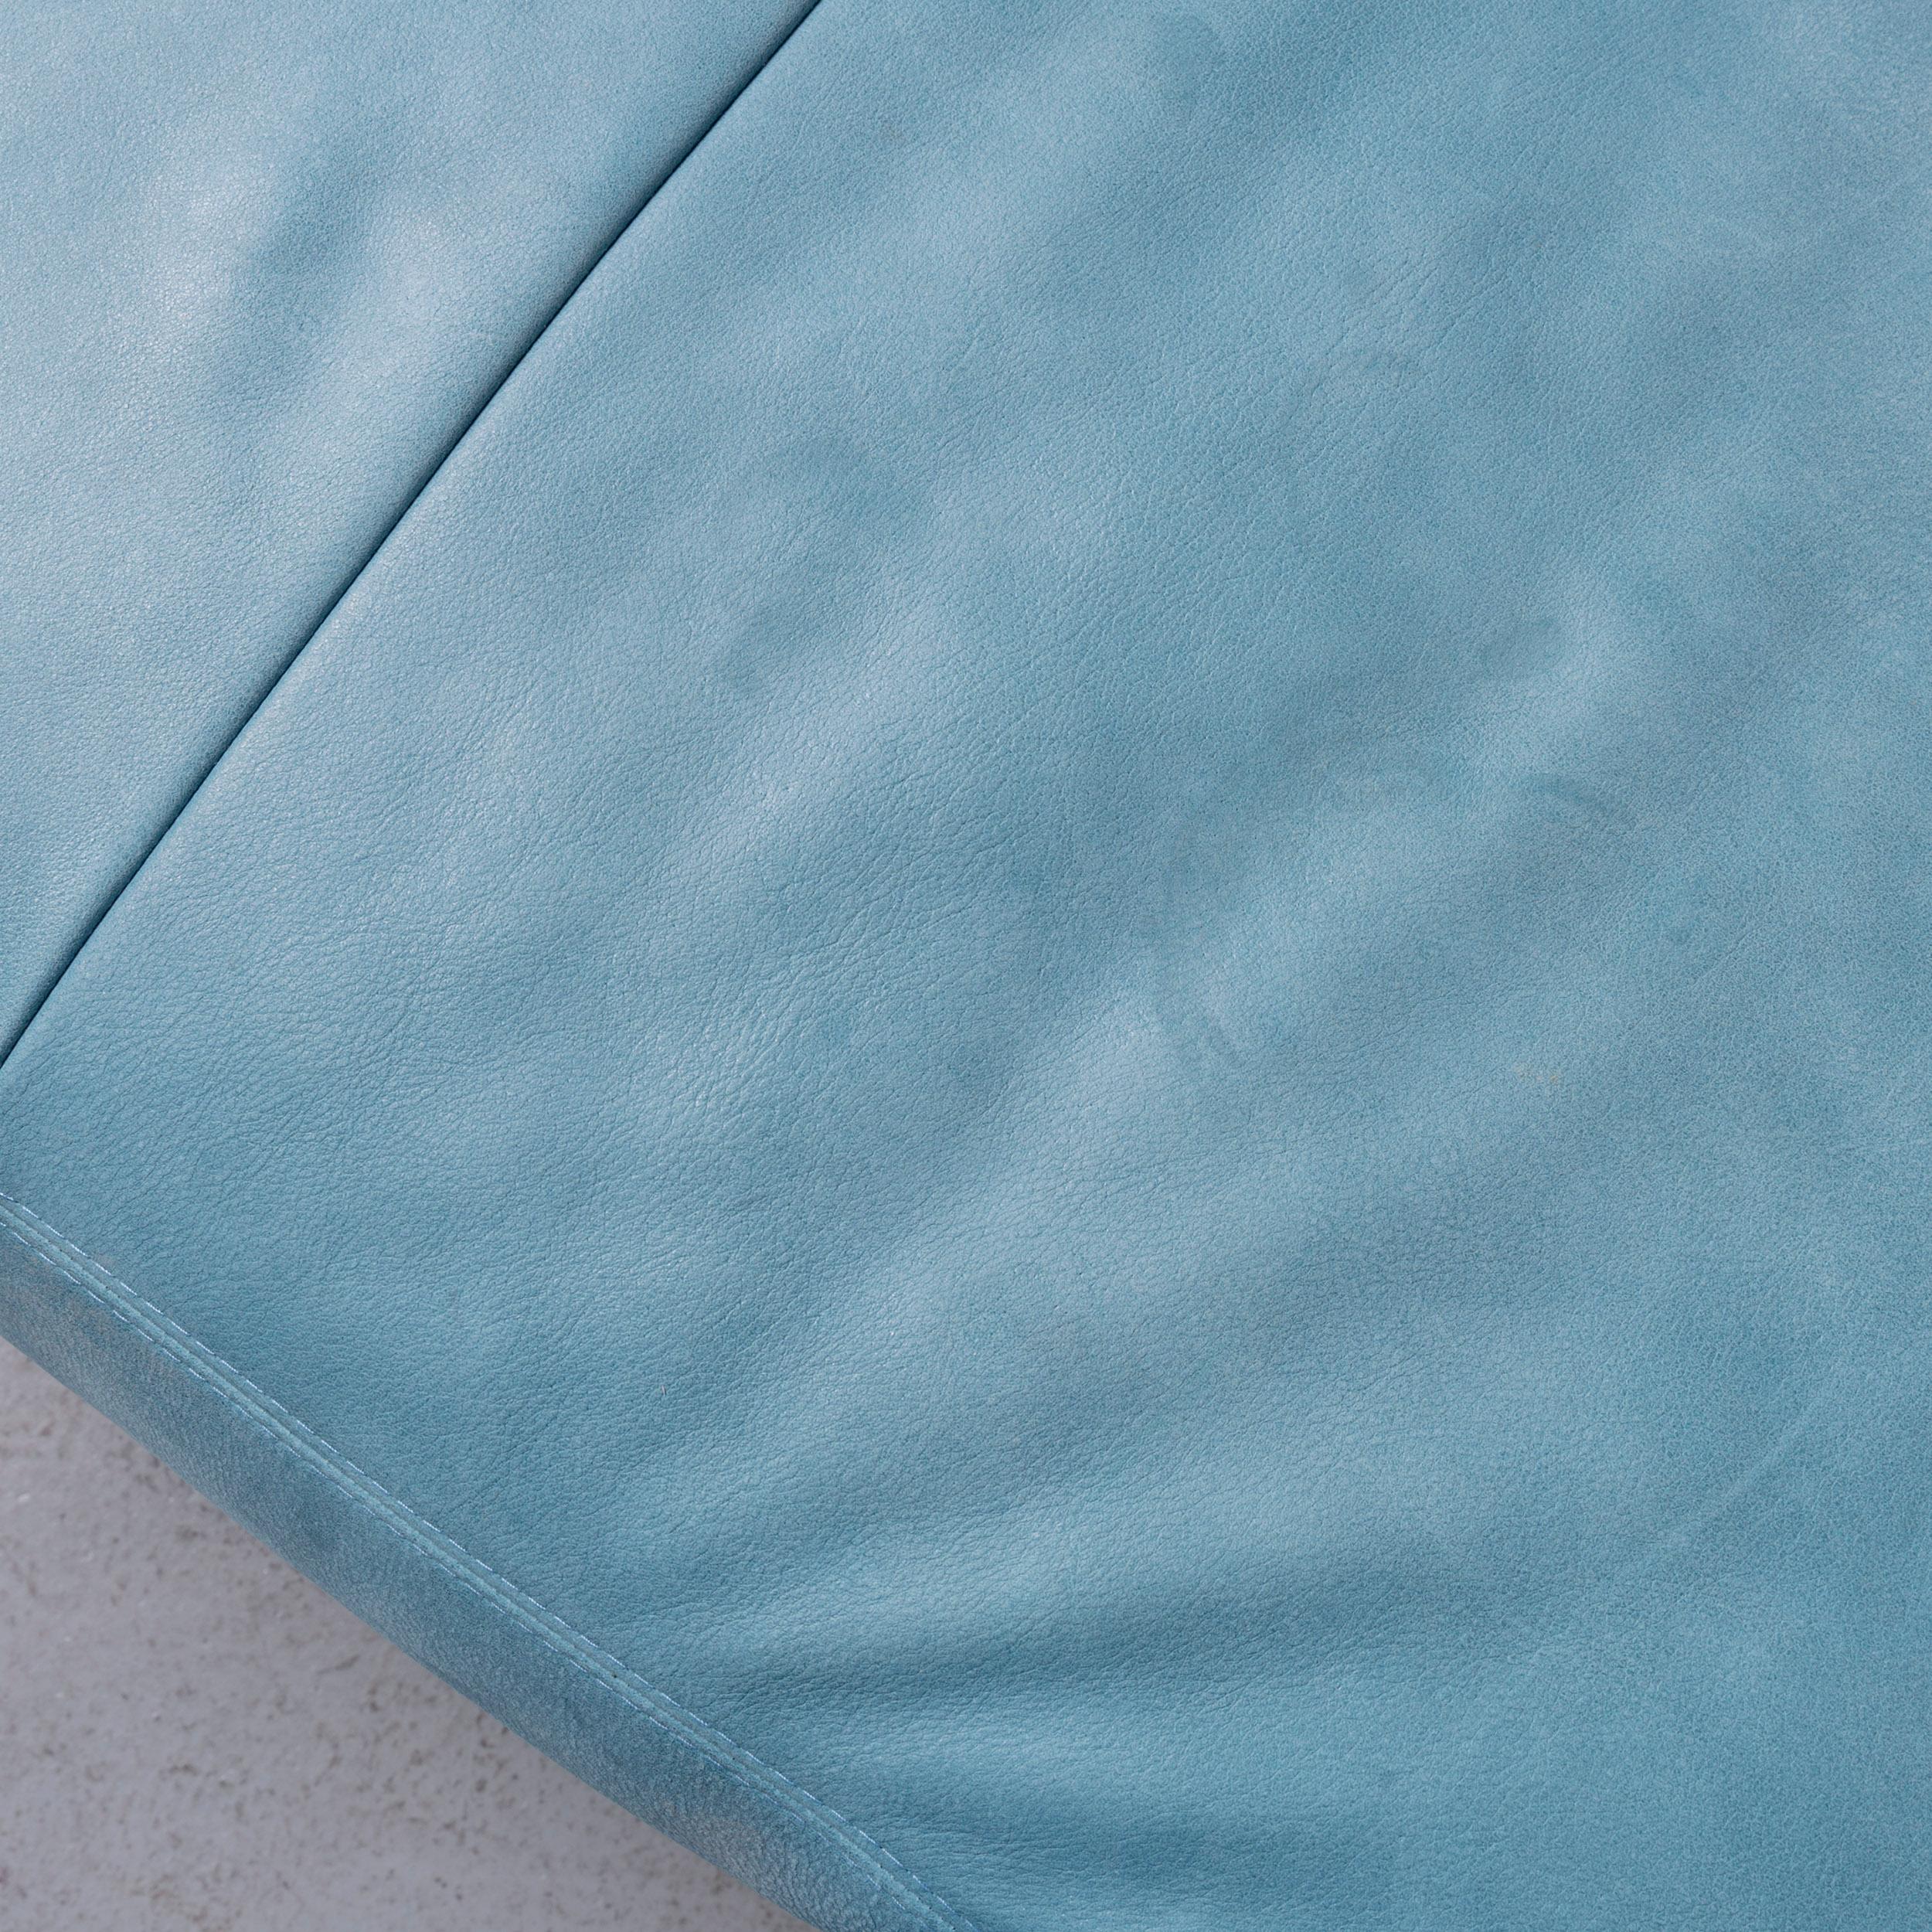 Koinor Garret Designer Leather Sofa in Bleu Corner, Sofa Couch In Good Condition For Sale In Cologne, DE